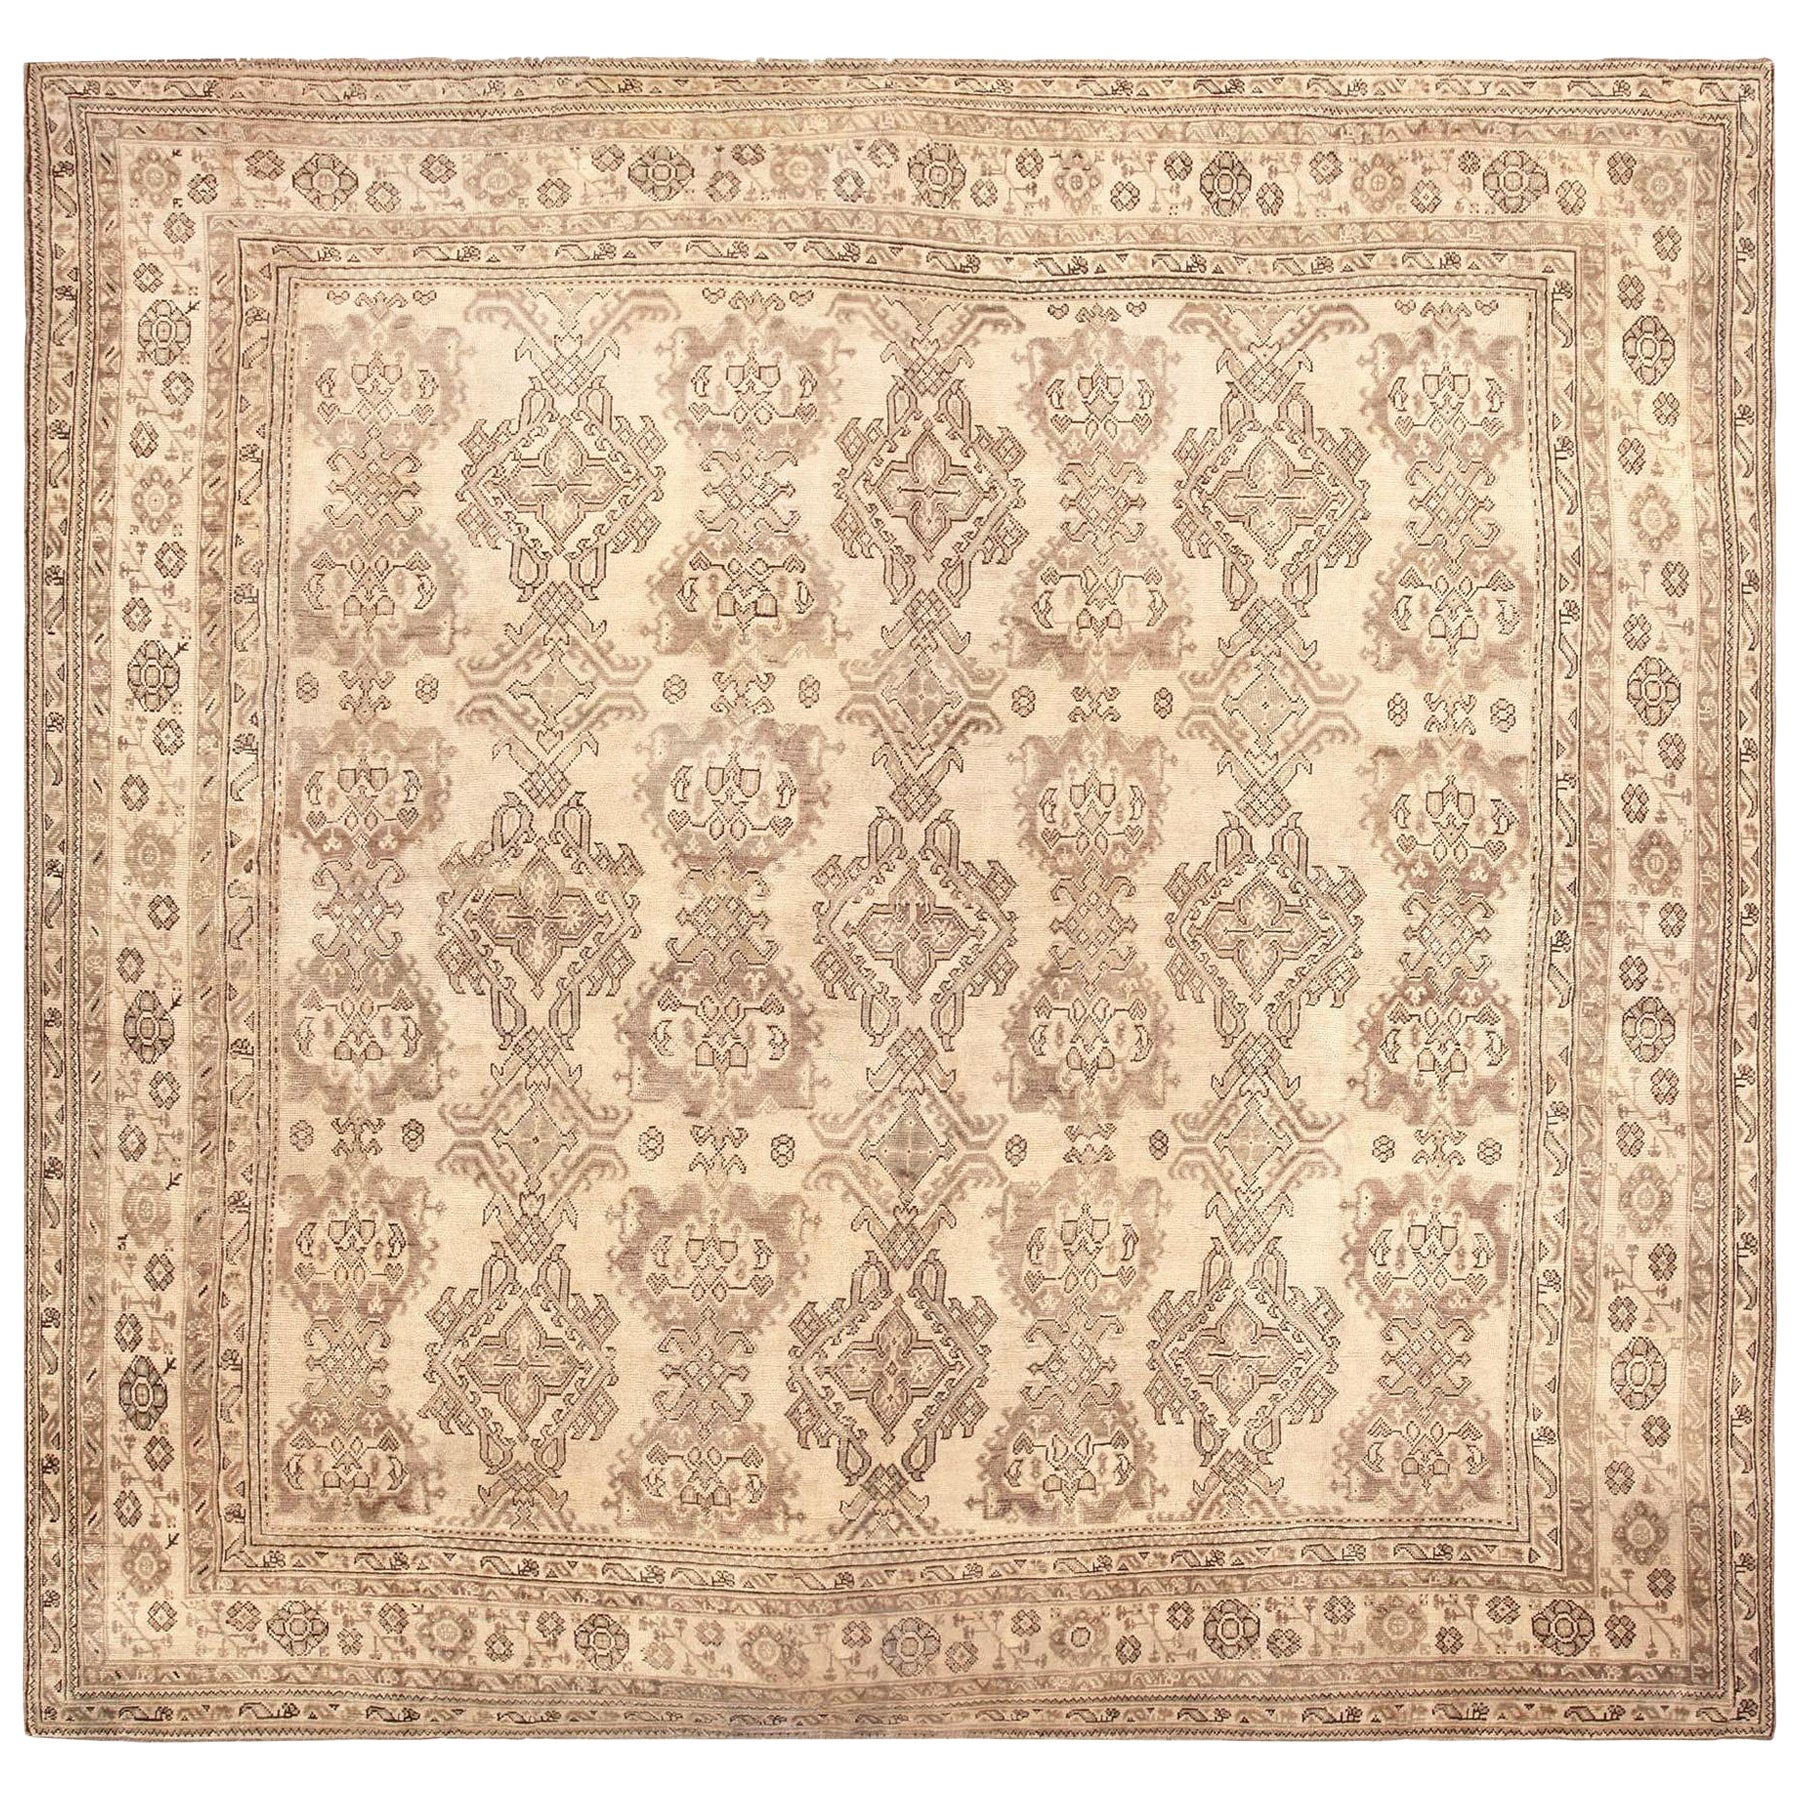 Antique Turkish Oushak Carpet. 17 ft 7 in x 18 ft 7 in